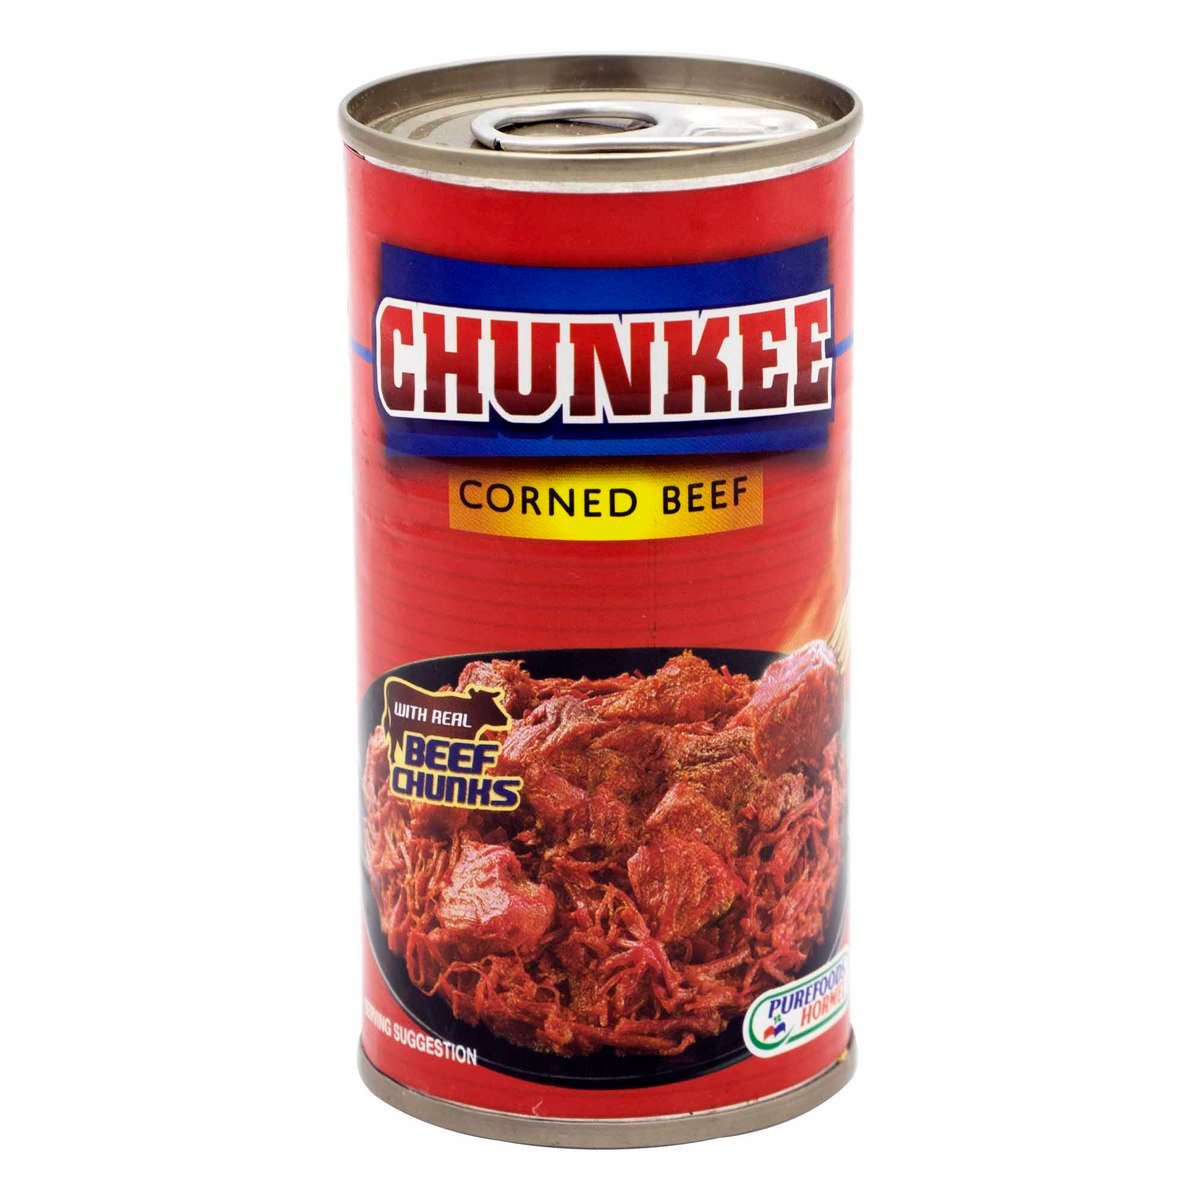 Pure Foods Chunkee Corned Beef 190g